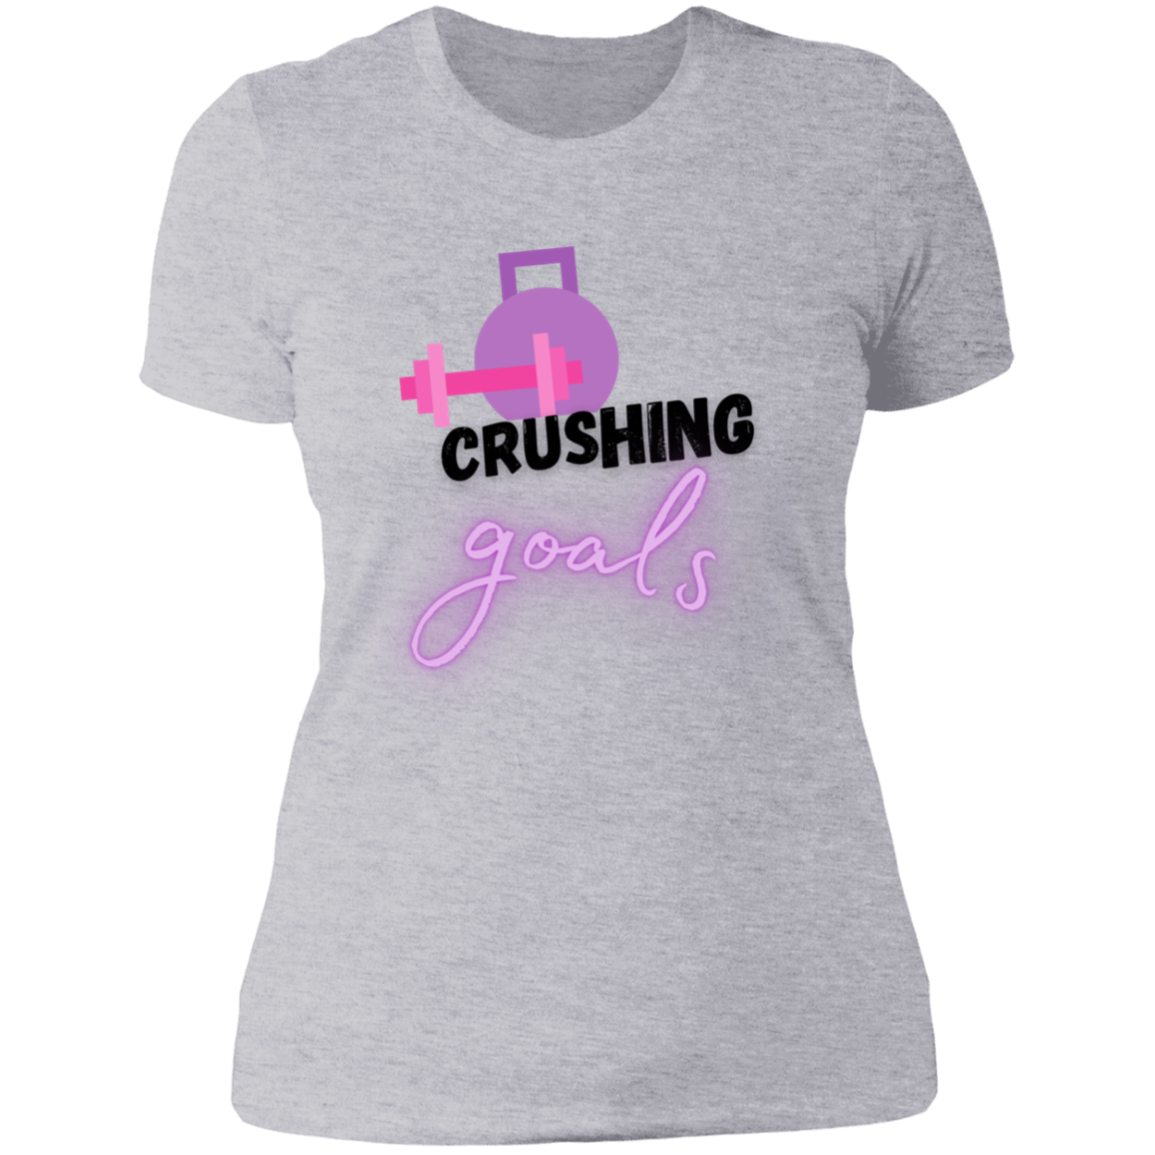 Crushing Goals T-Shirt